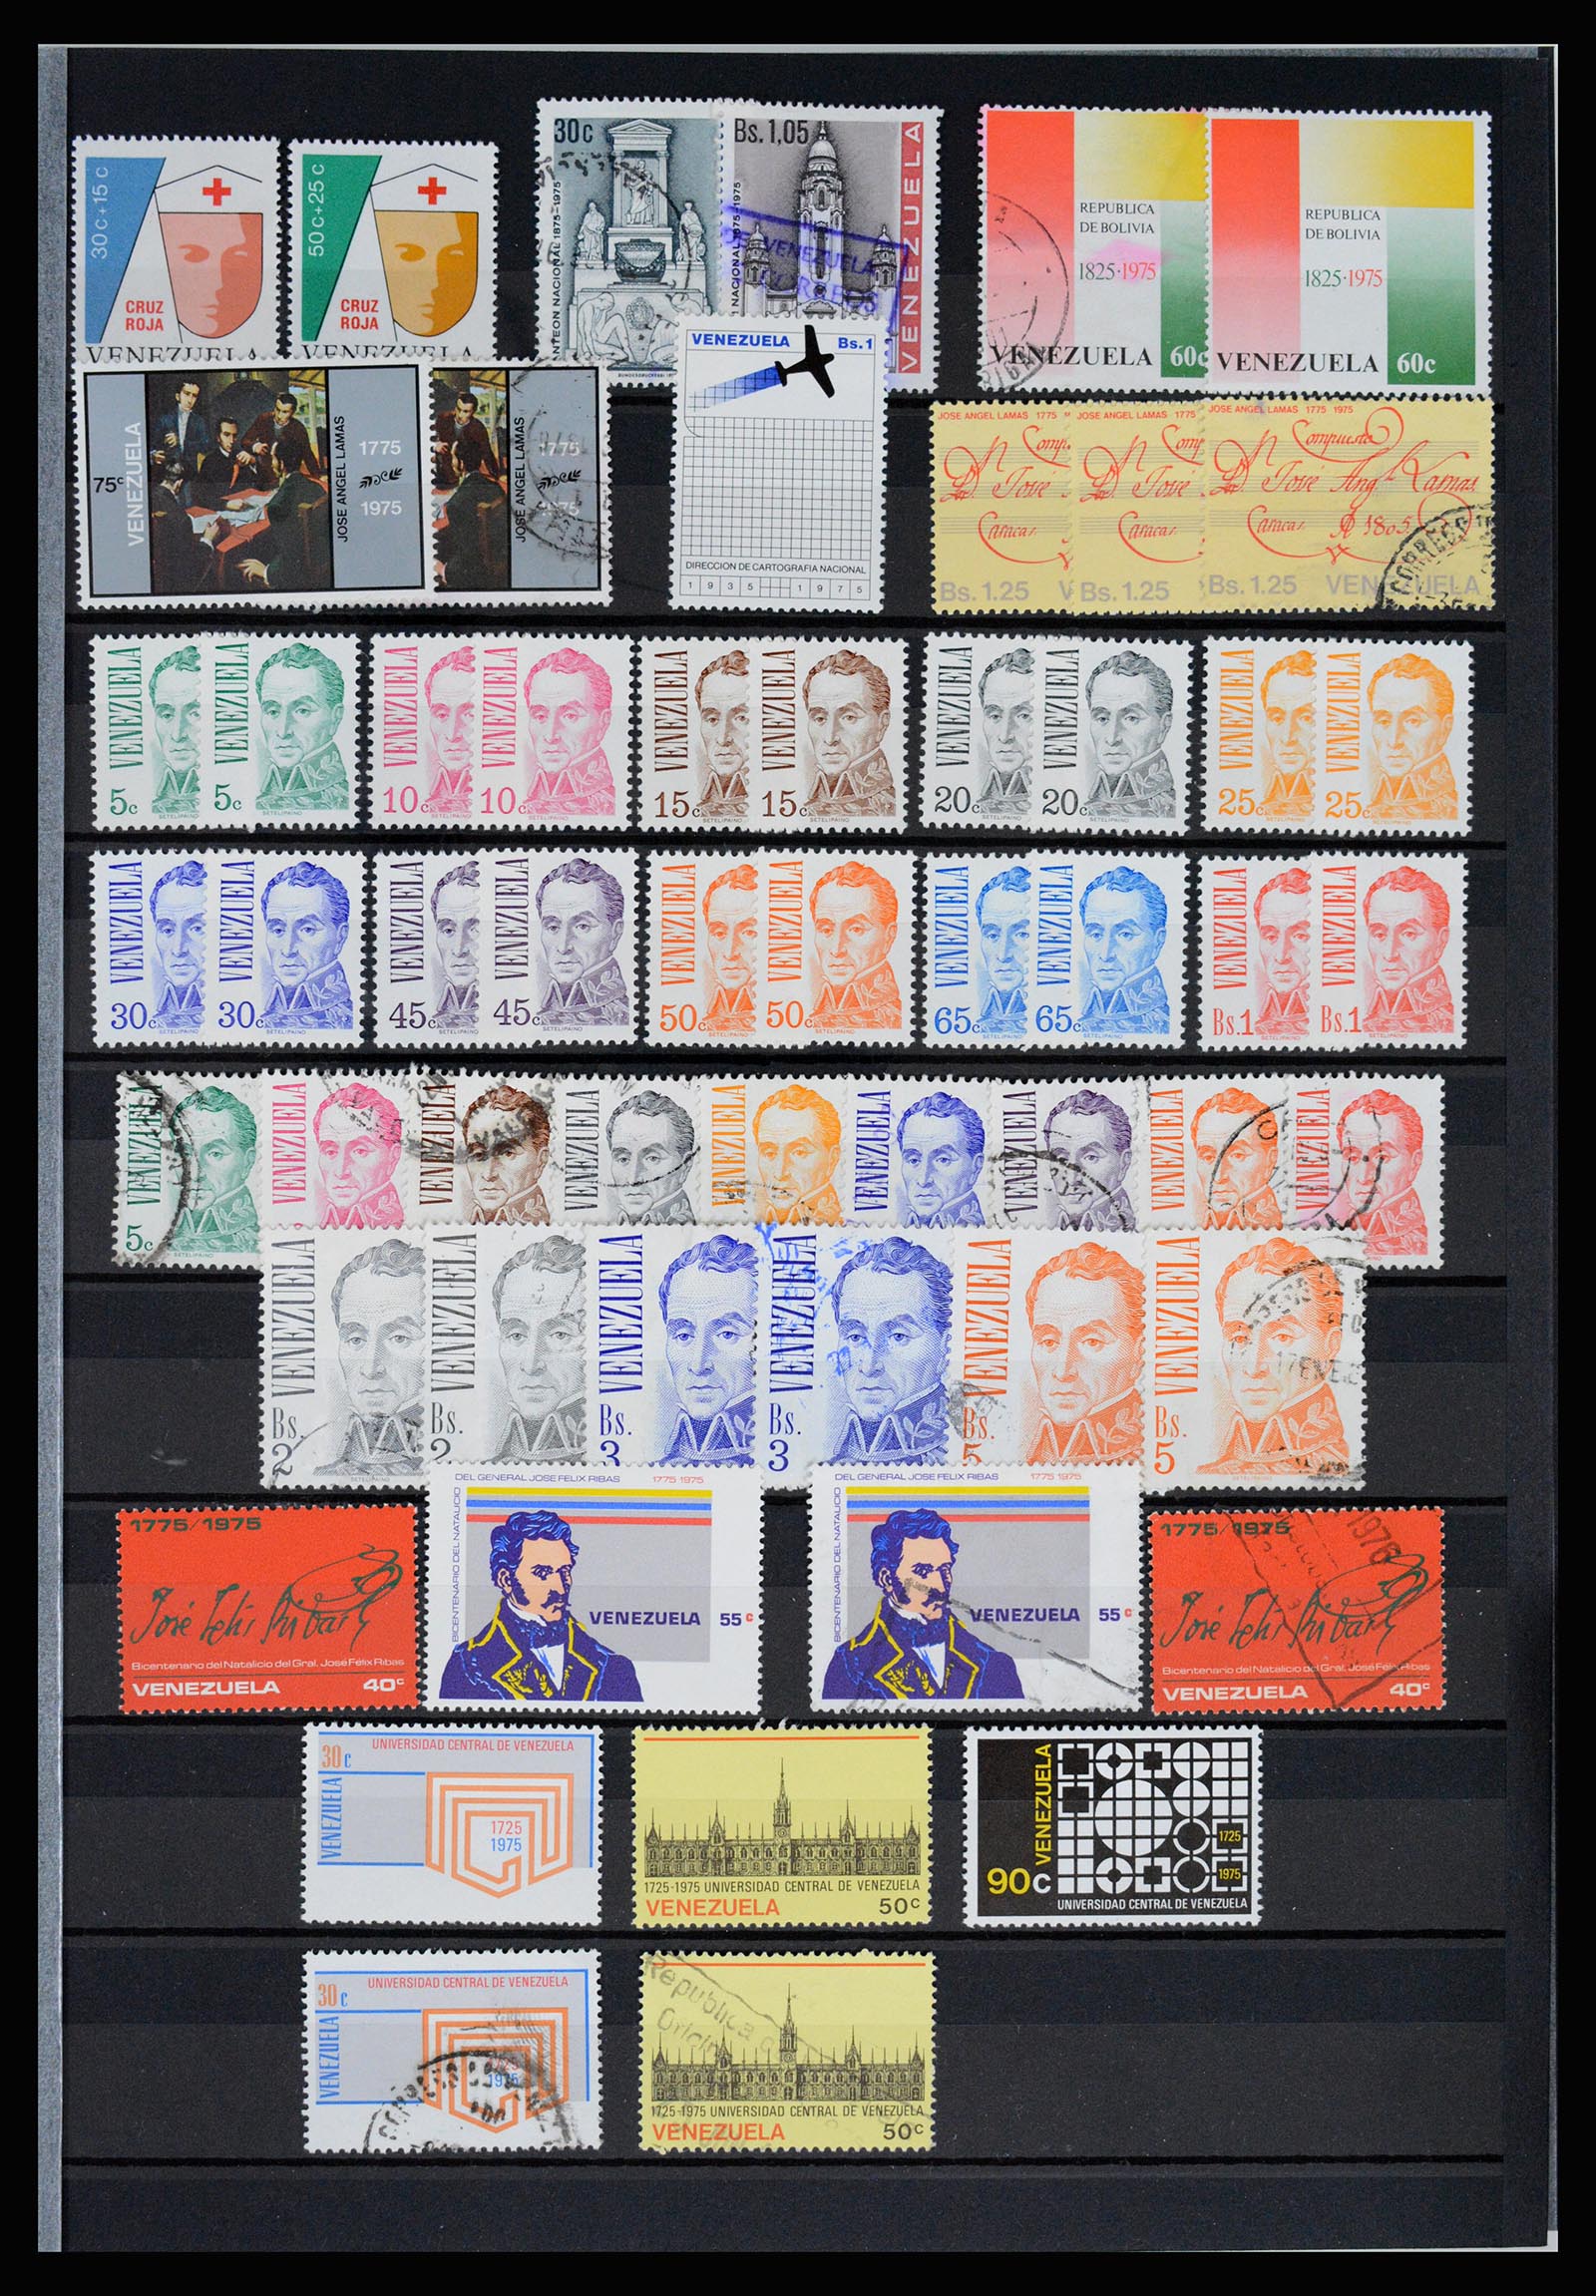 36987 072 - Stamp collection 36987 Venezuela 1860-1995.